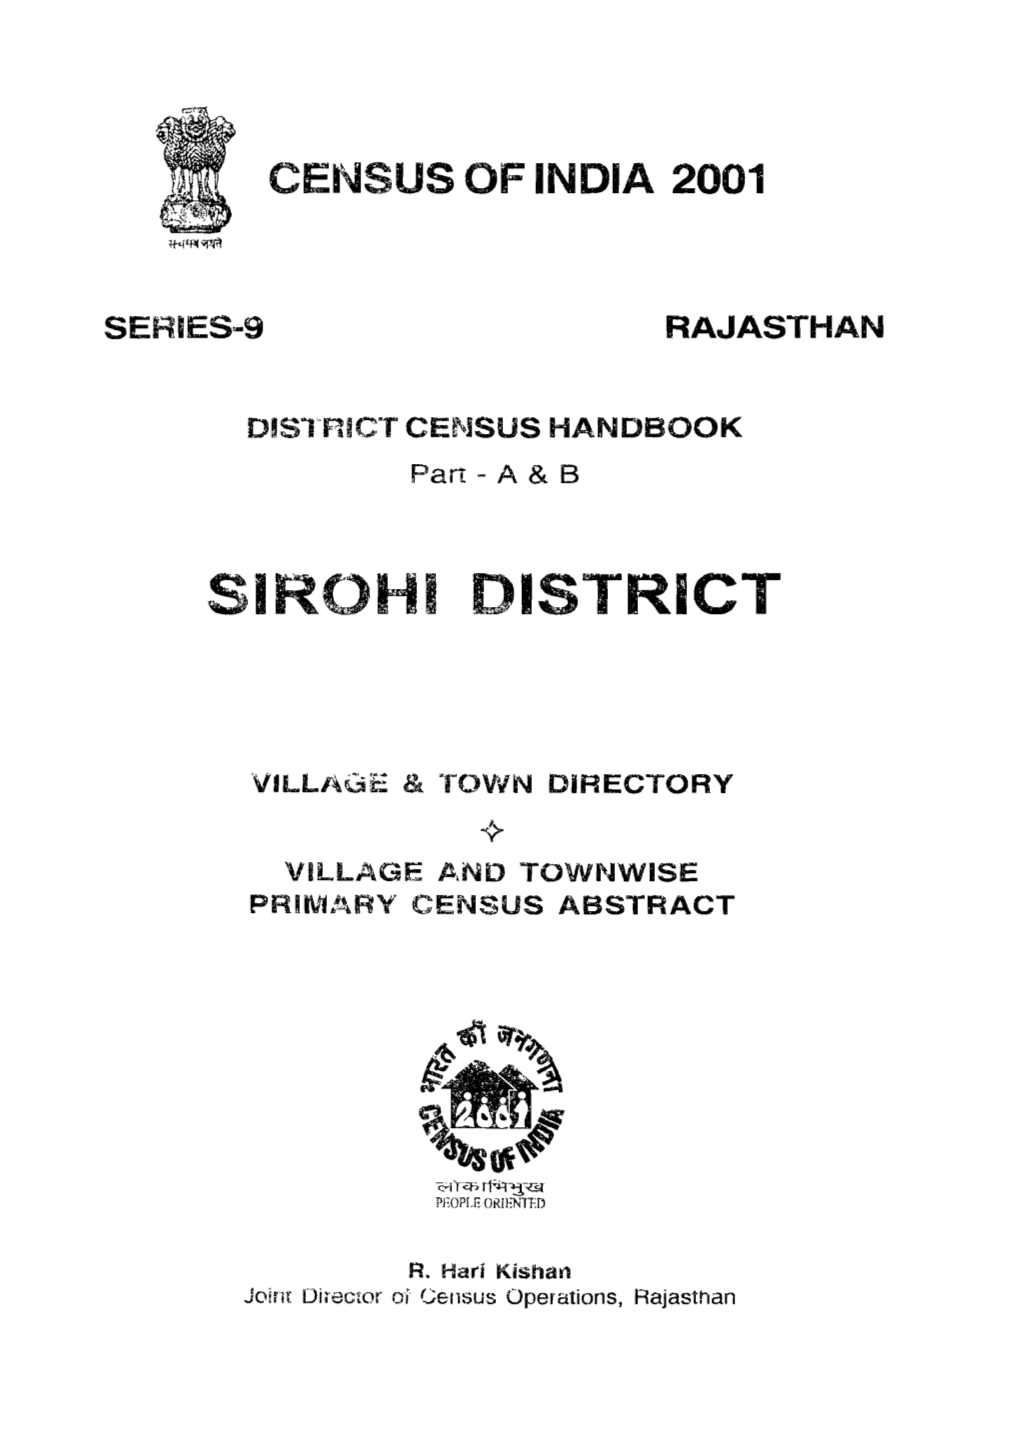 District Census Handbook, Sirohi, Part XII-A & B, Series-9